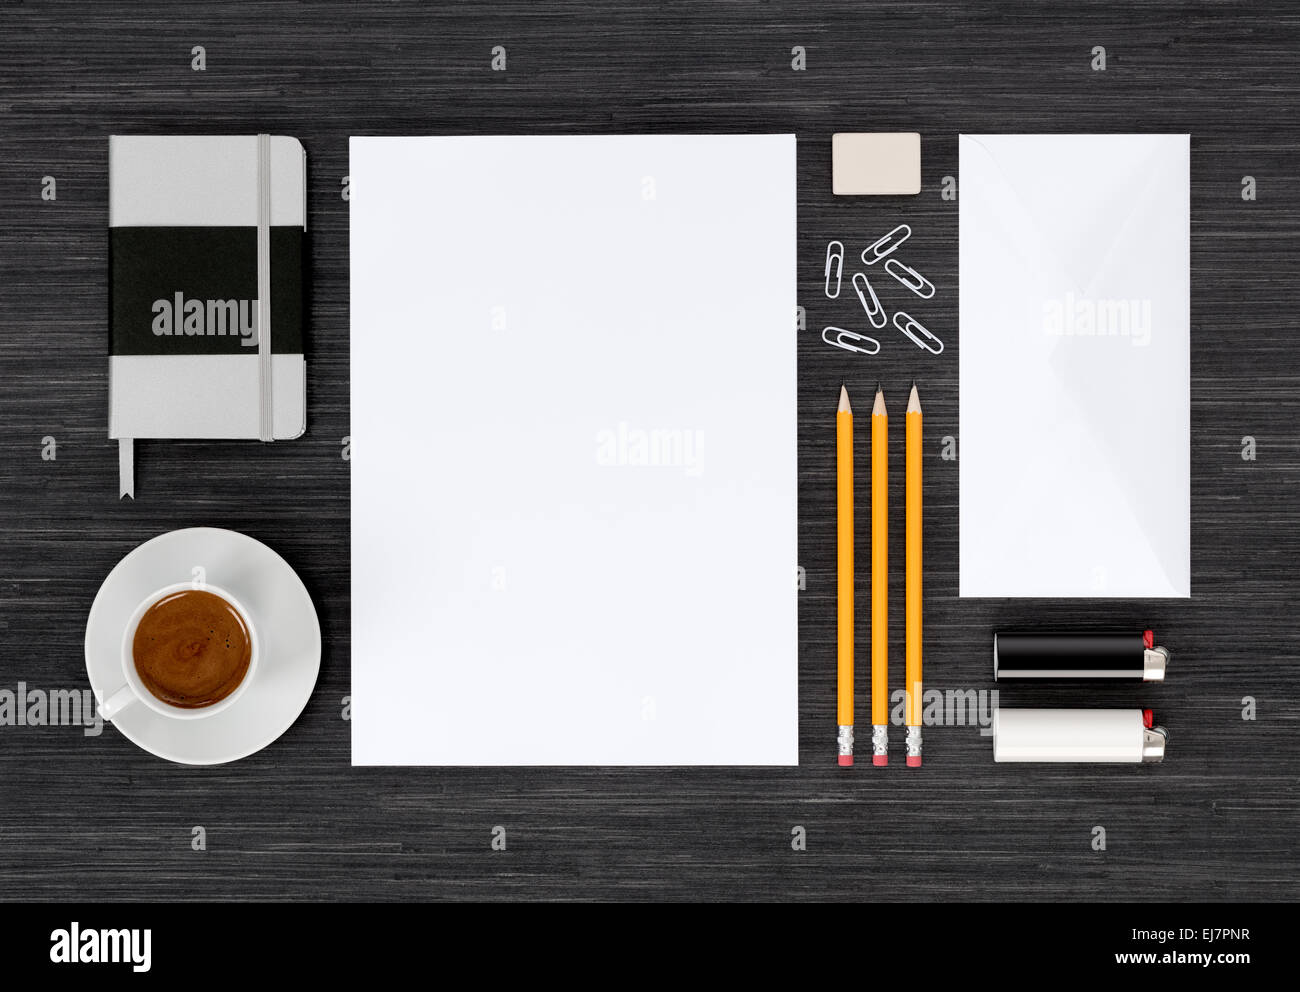 Branding identity mock up with templates for design presentation or portfolio on black table. Stock Photo